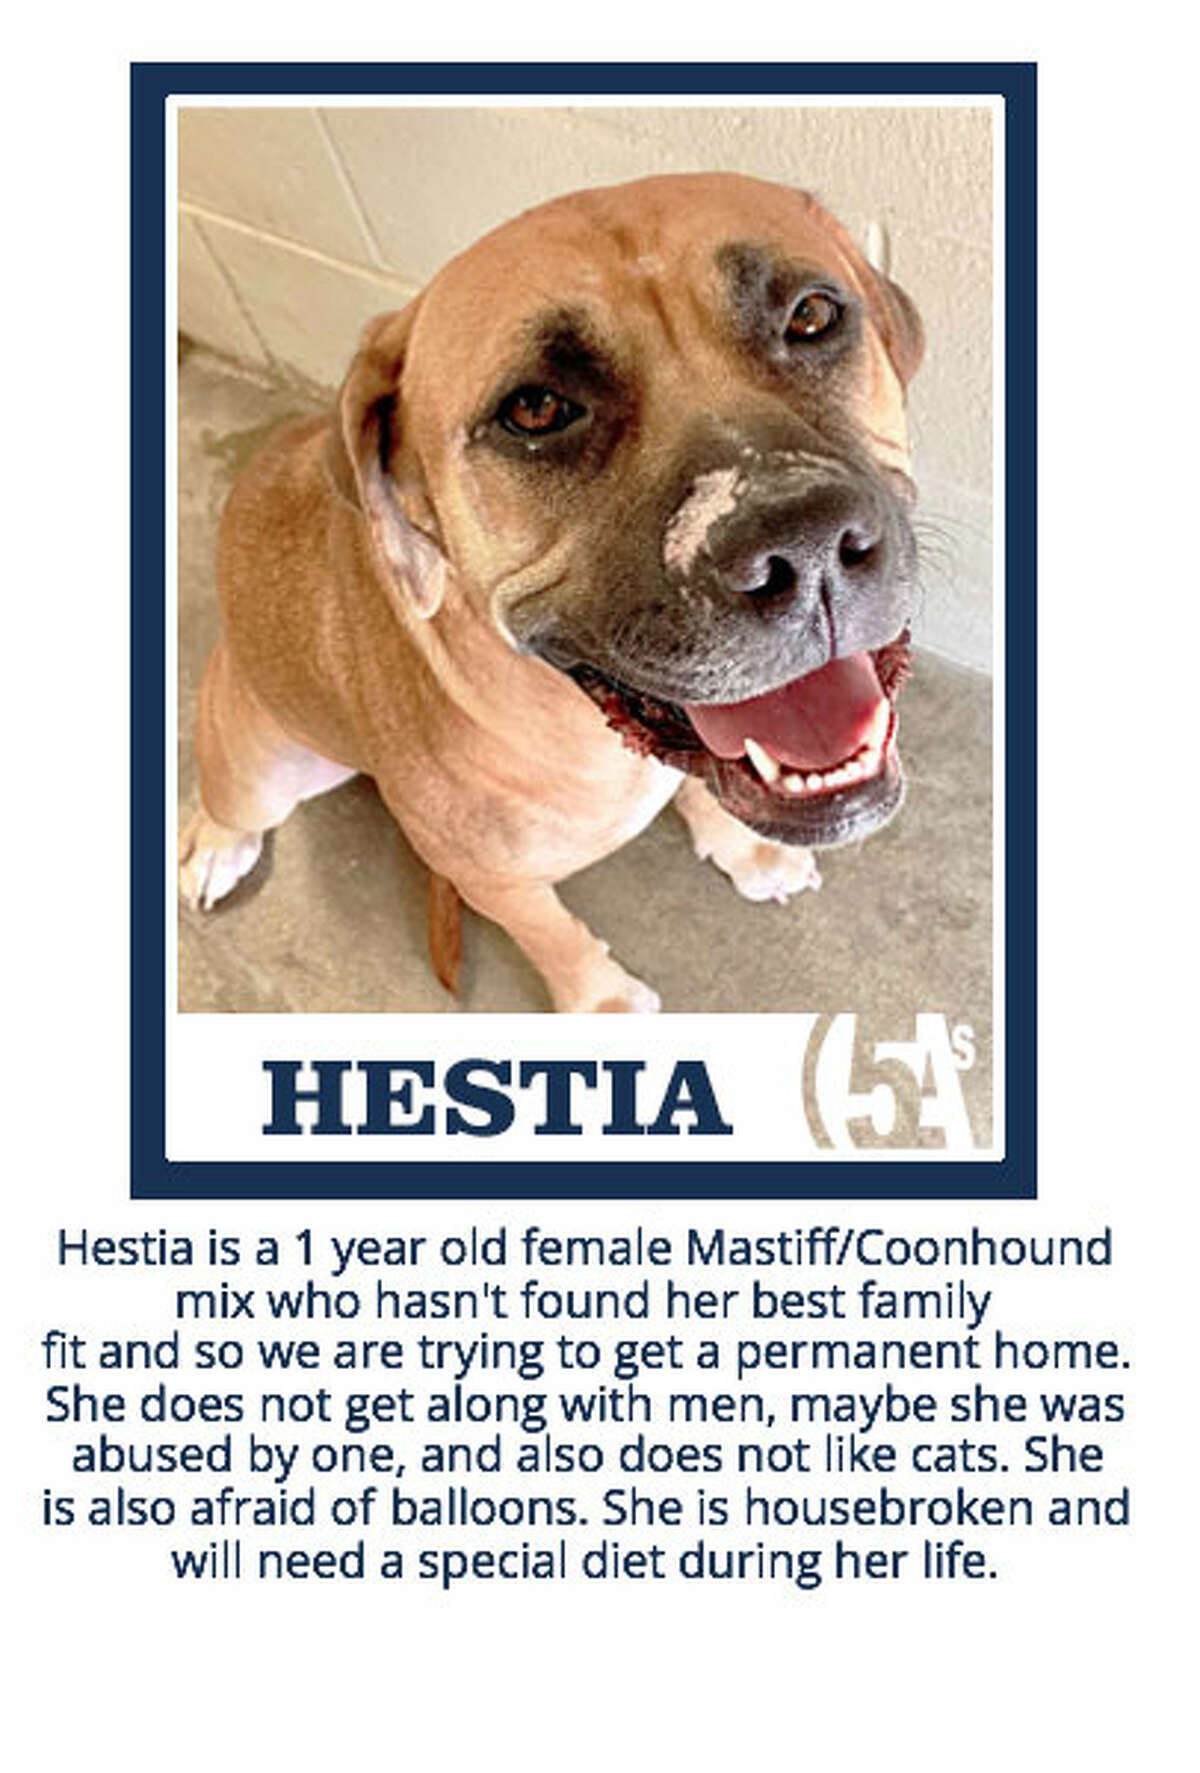 Hestia desires a loving, compassionate home.